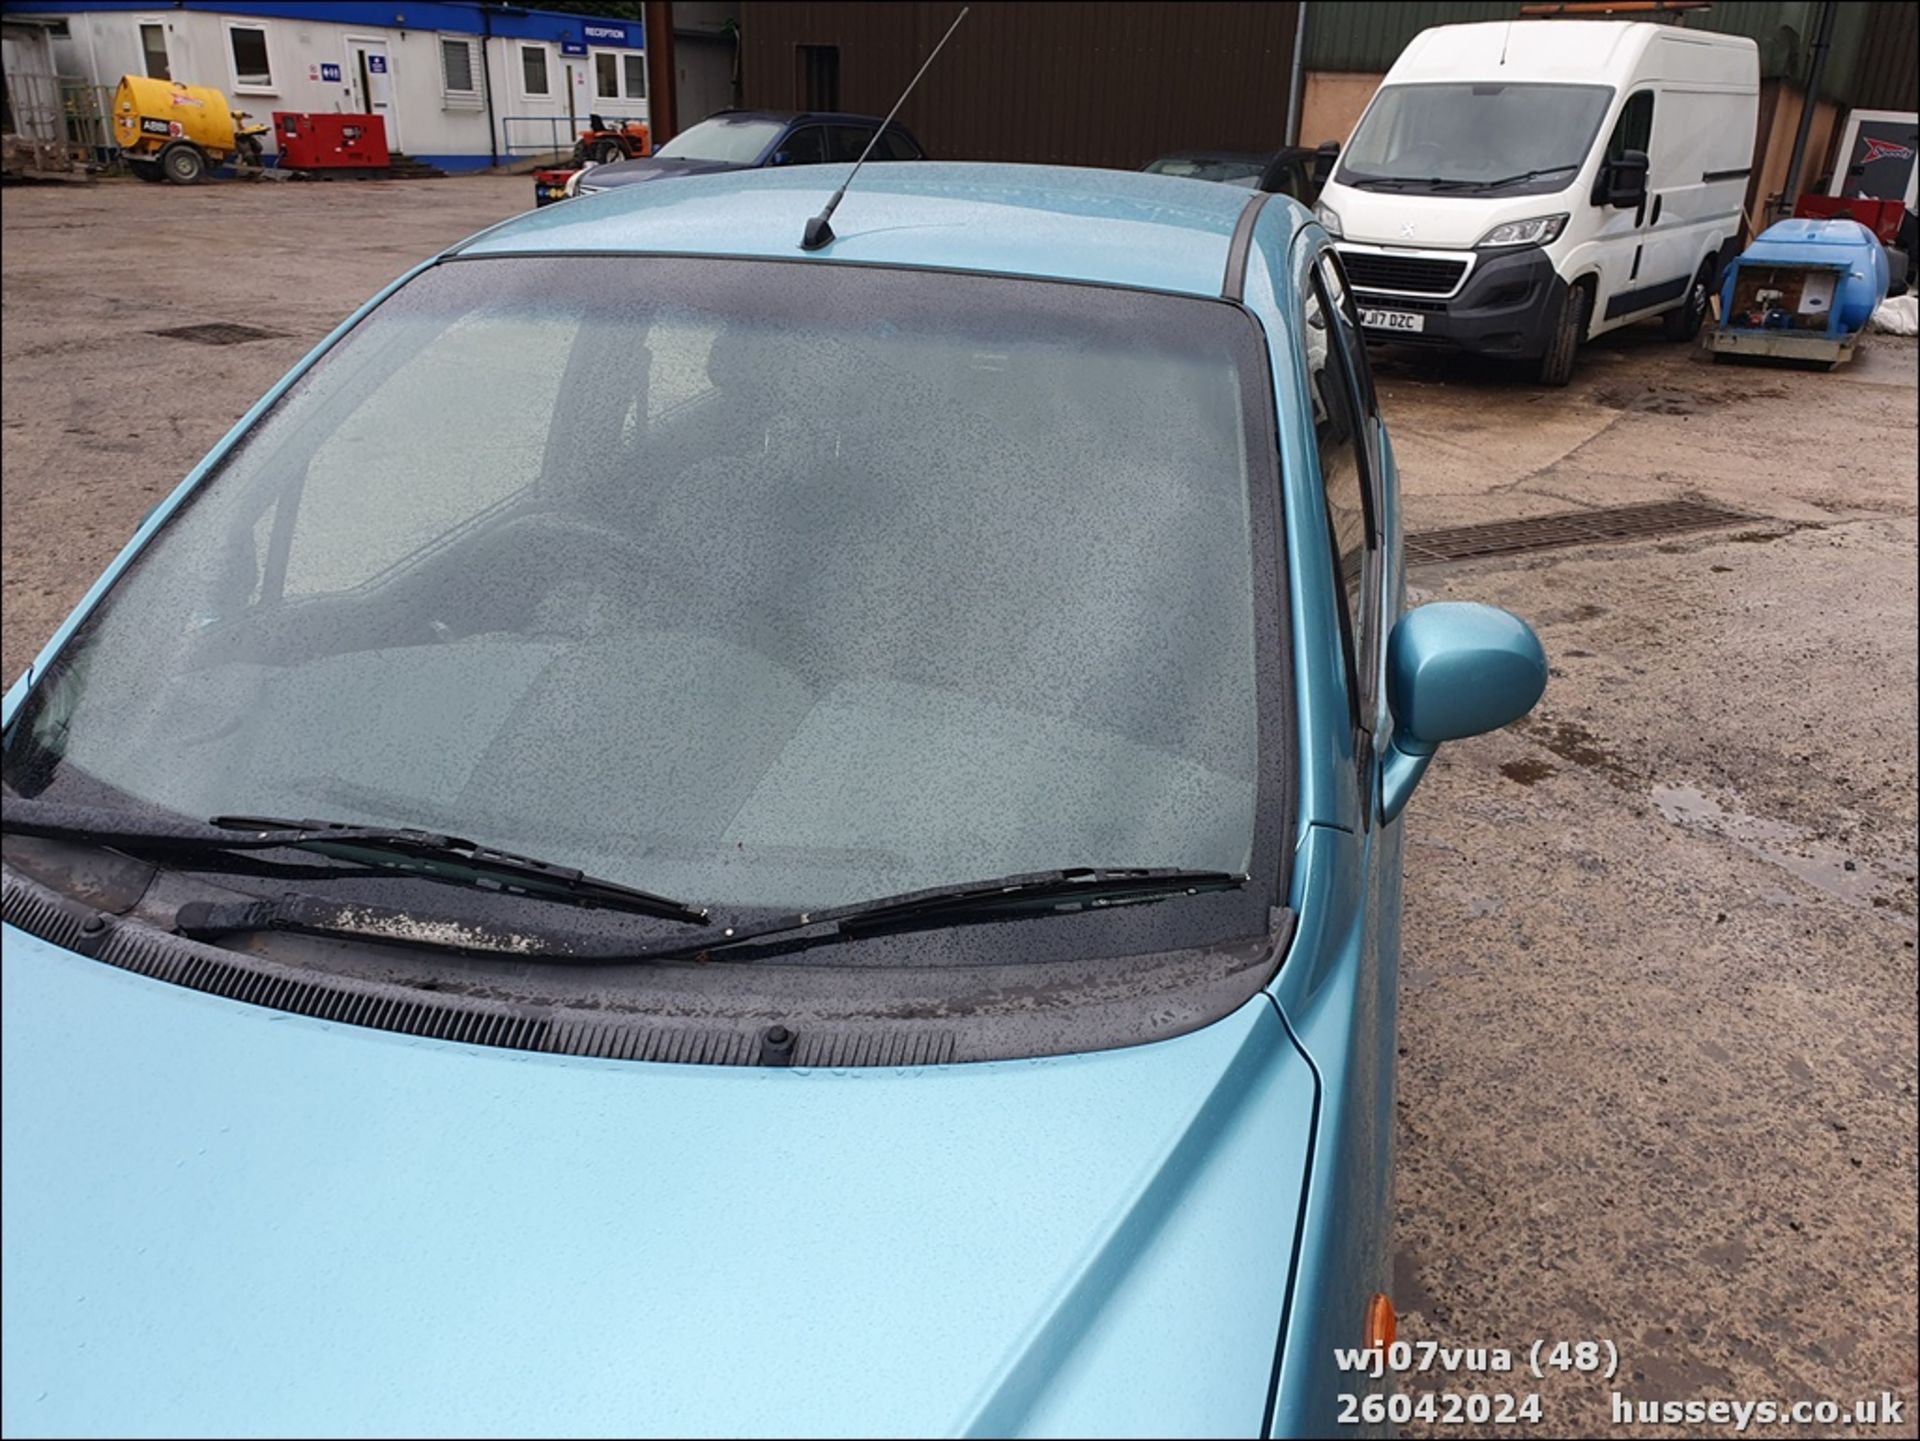 07/07 CHEVROLET MATIZ SE AUTO - 796cc 5dr Hatchback (Blue, 36k) - Image 49 of 56